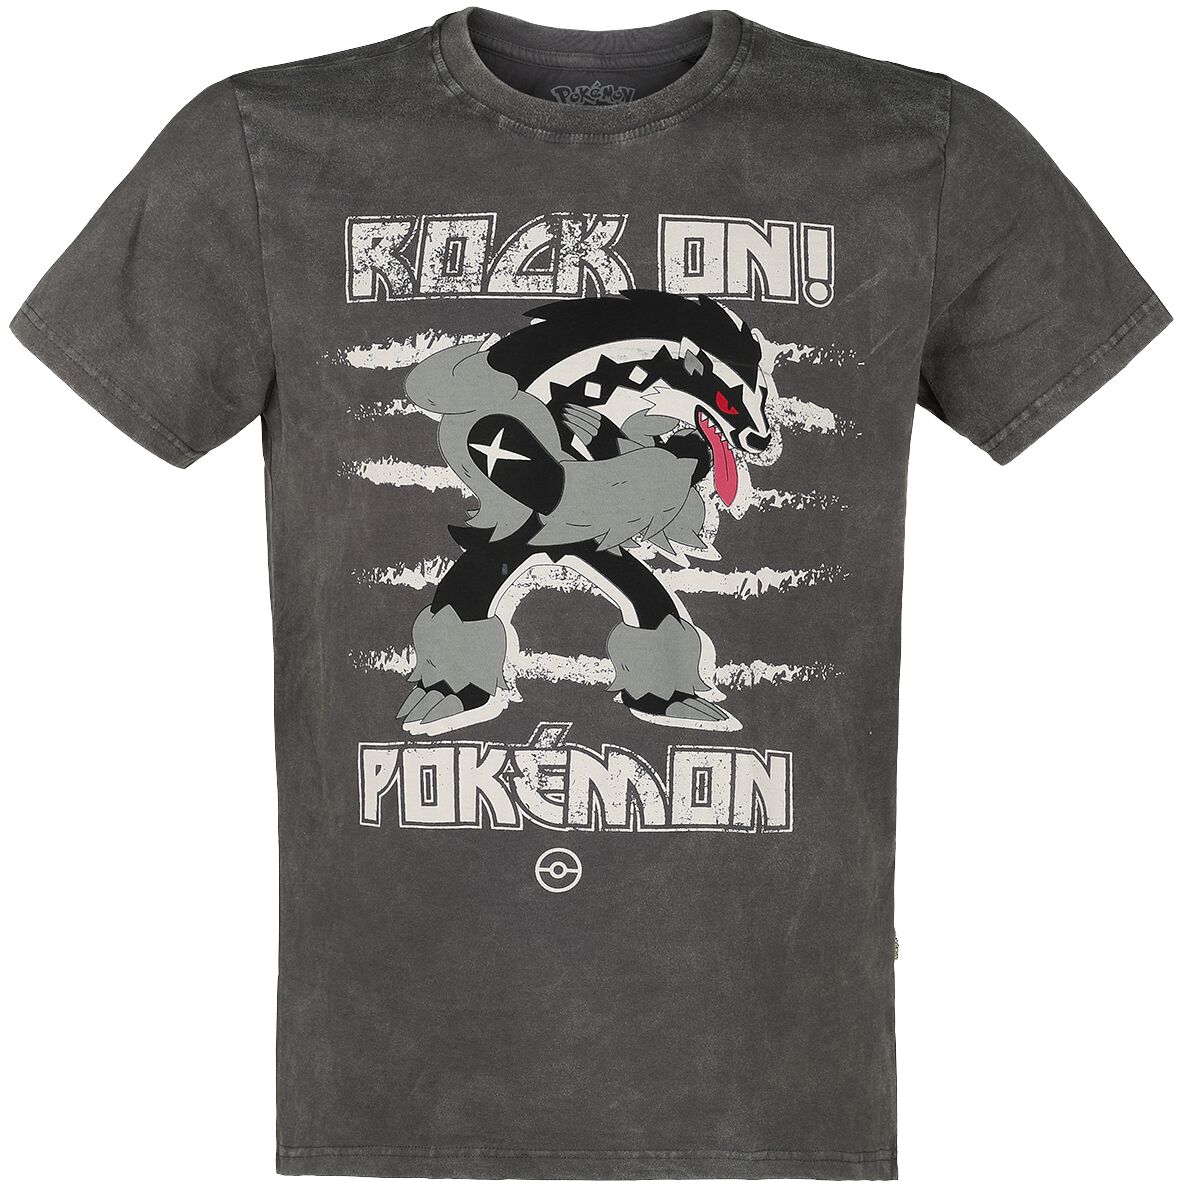 Pokémon Obstagoon Punk T-Shirt mottled dark grey